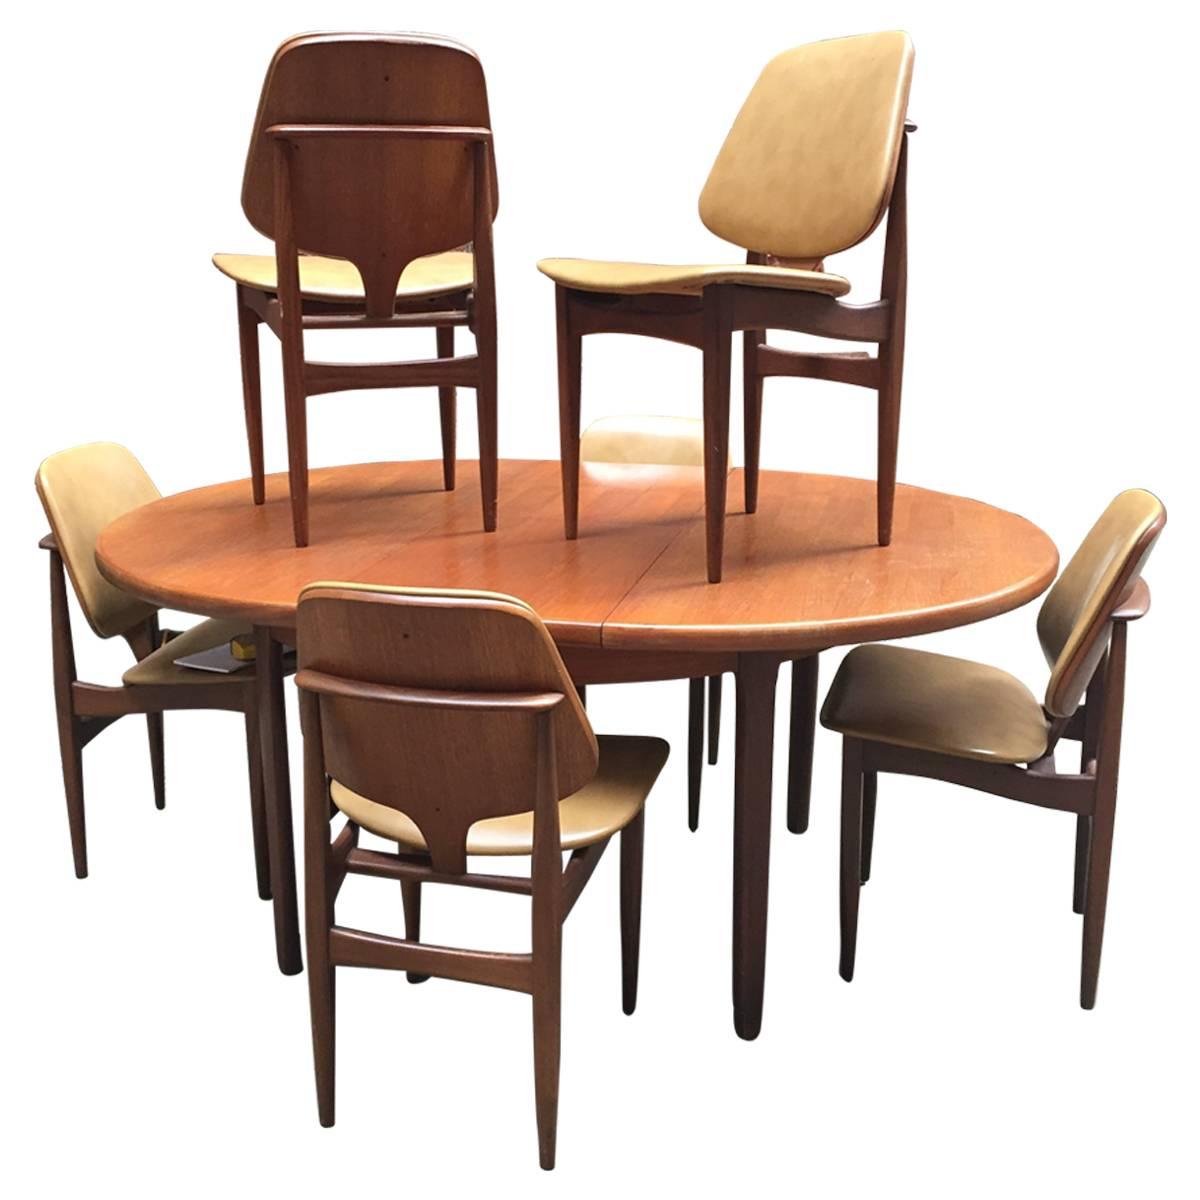 Modern English Elliots of Newbury Teak Dining Table and Chairs